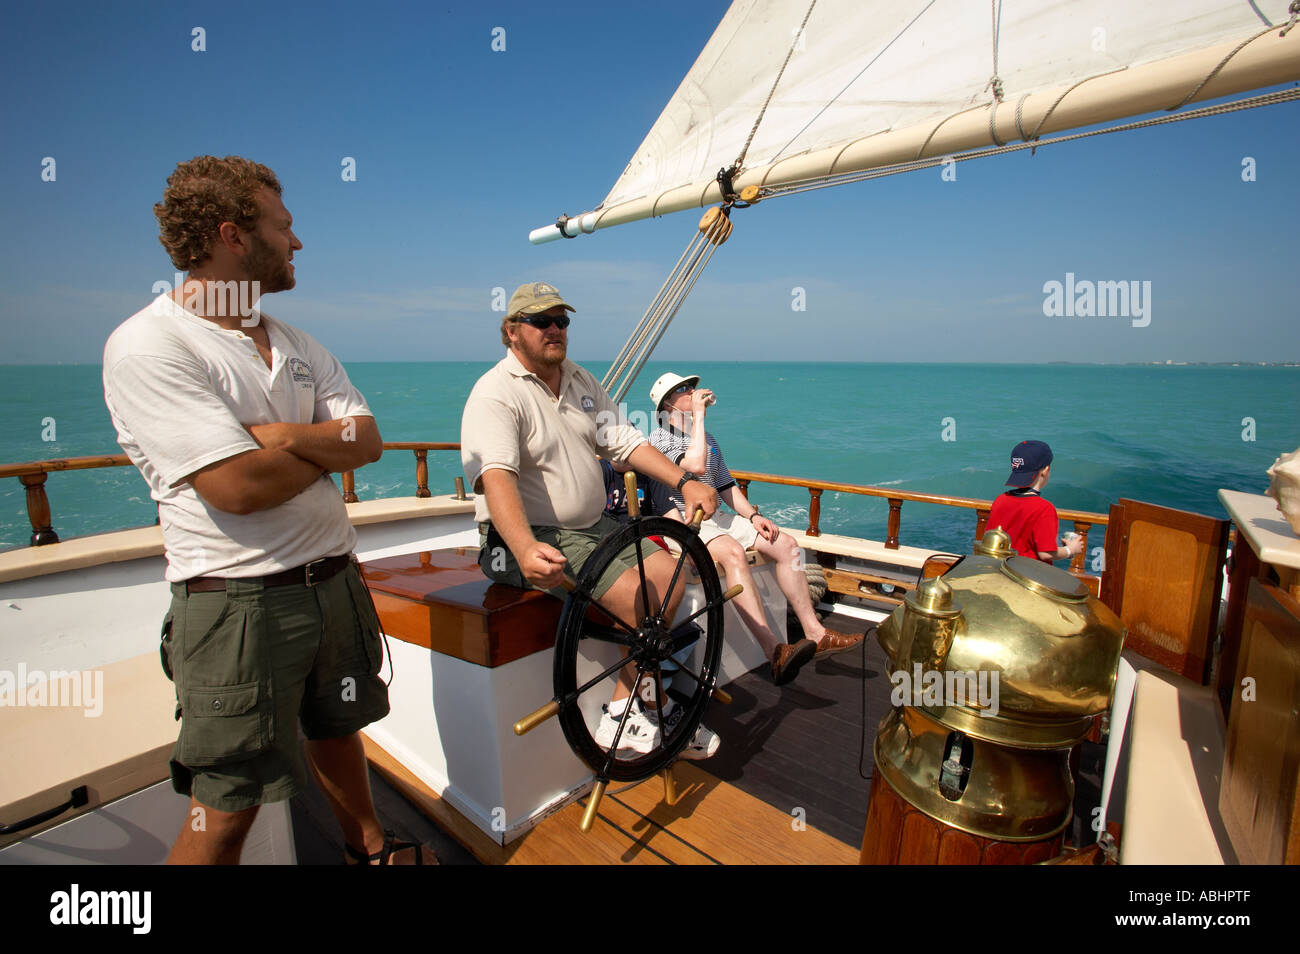 schooner-western-union  Key West Travel Guide - Visitor Information for  Key West, FL in the Florida Keys